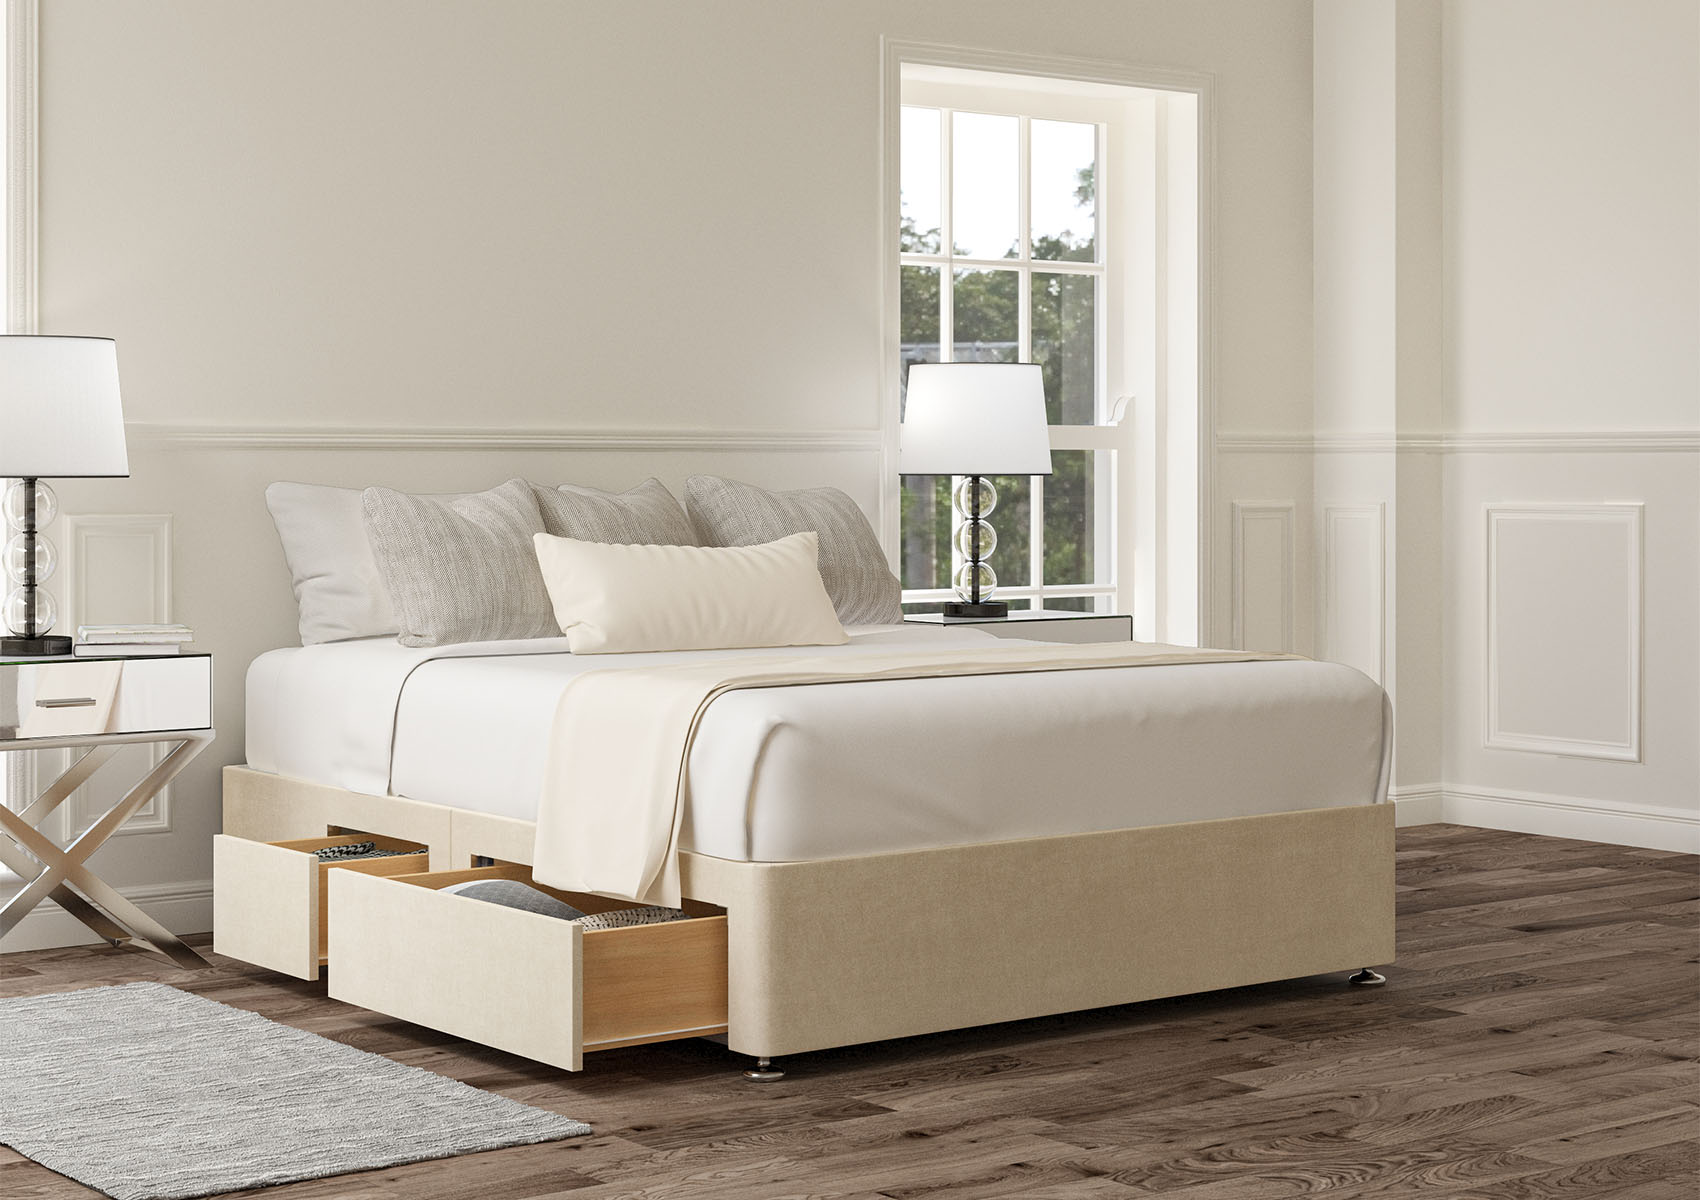 View 22 Siera Denim Upholstered King Size Storage Bed Time4Sleep information